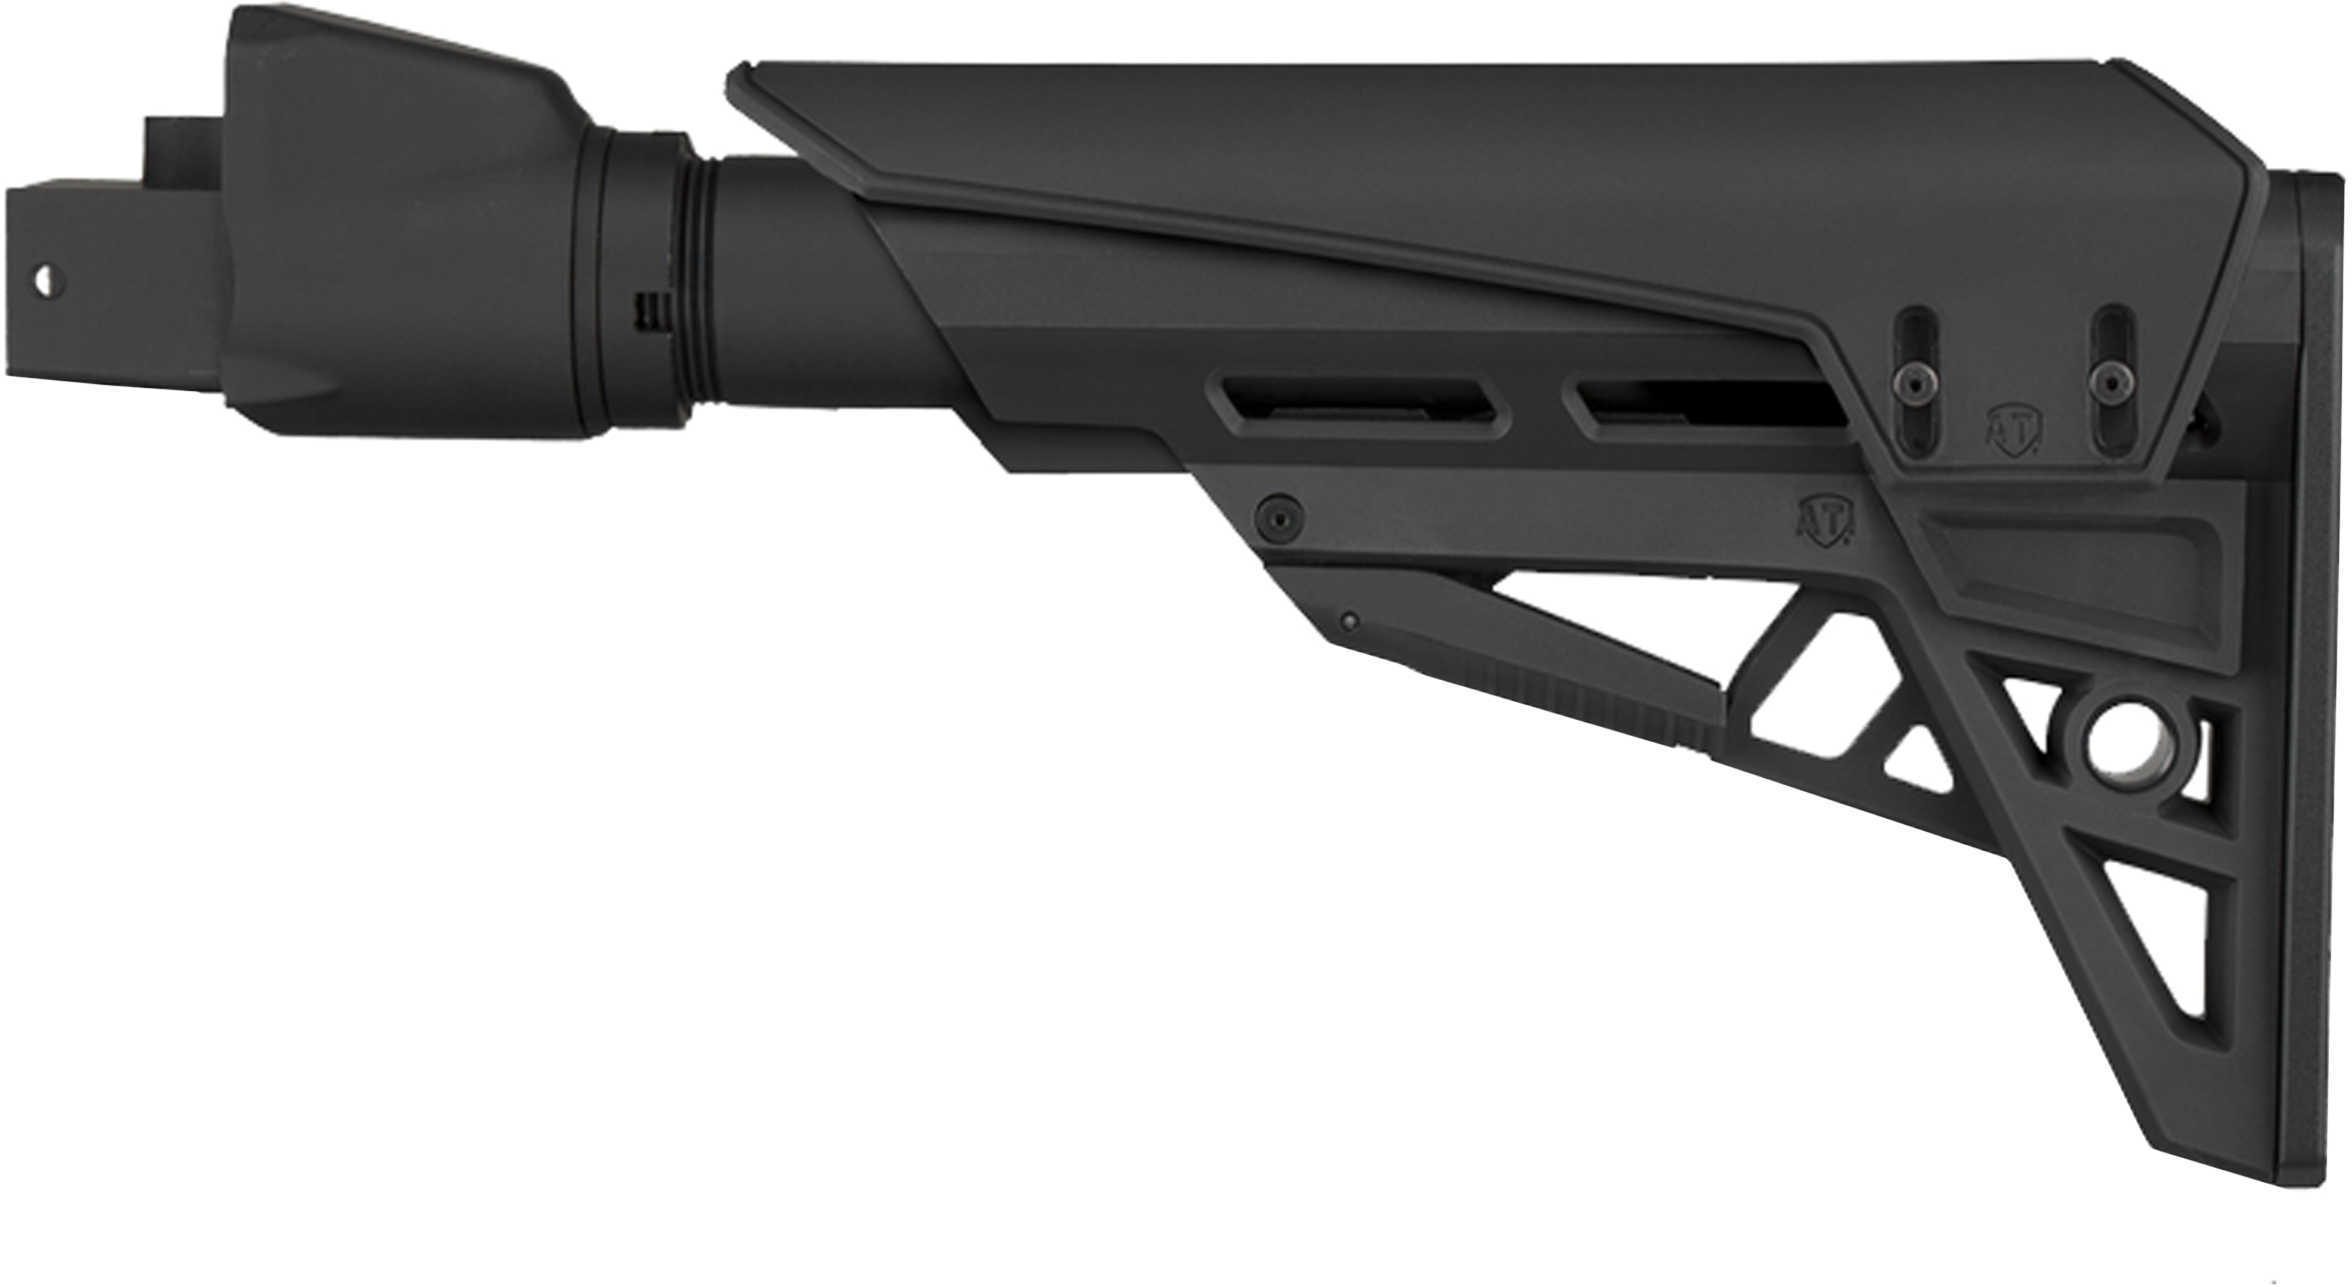 ATI AK-47 TactLite Elite Adj Stock W/ Scorpion Pad